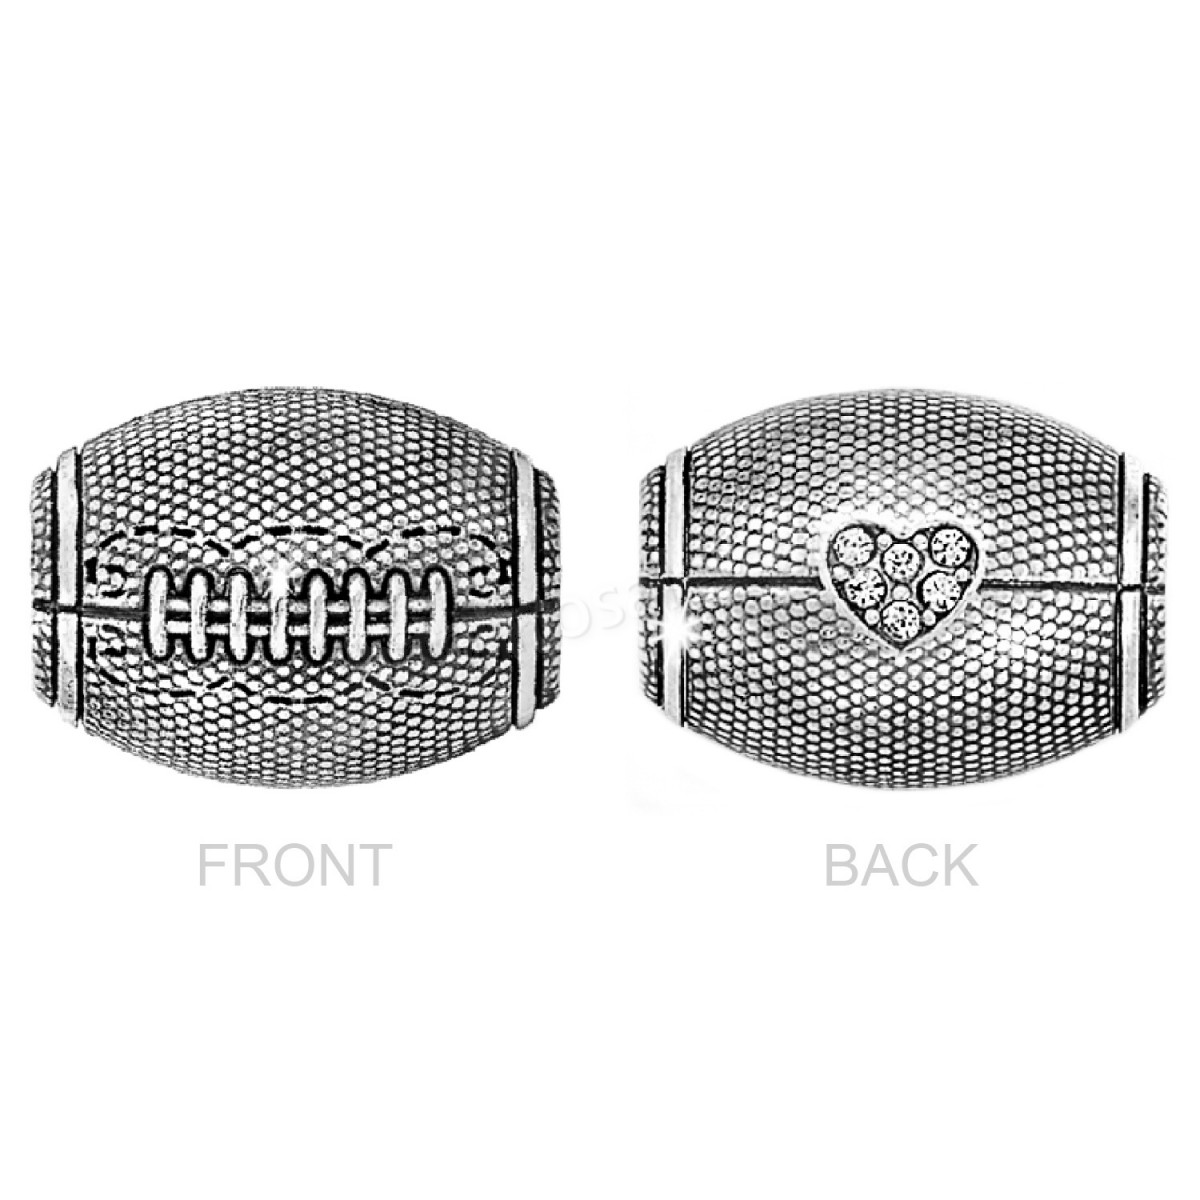 Brighton Collectibles & Online Discount Clarity Amulet Bracelet Set - -2